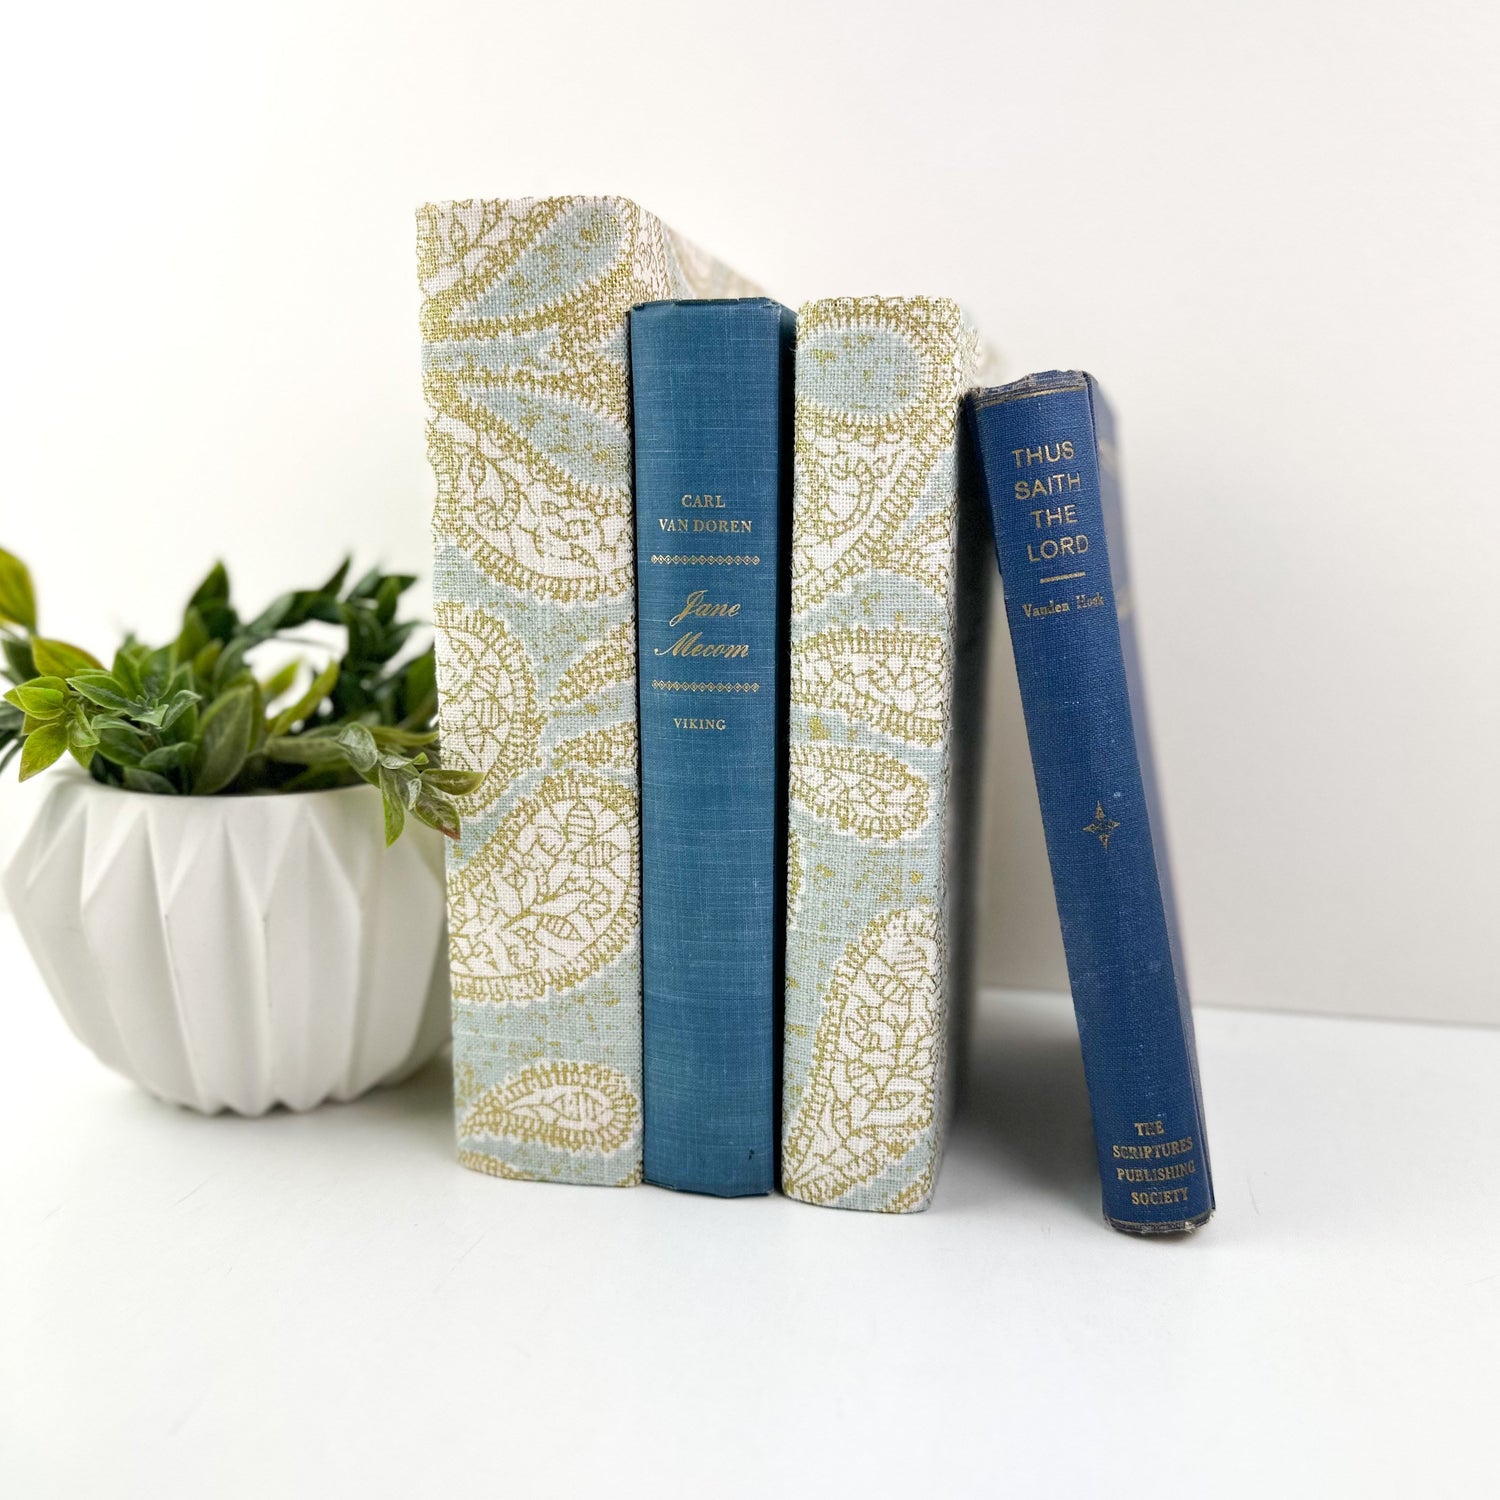 Vintage and Linen Wrapped Books for Shelf Decor, Decorative Books, Book Set, Coffee Table Decor, Book Bundle